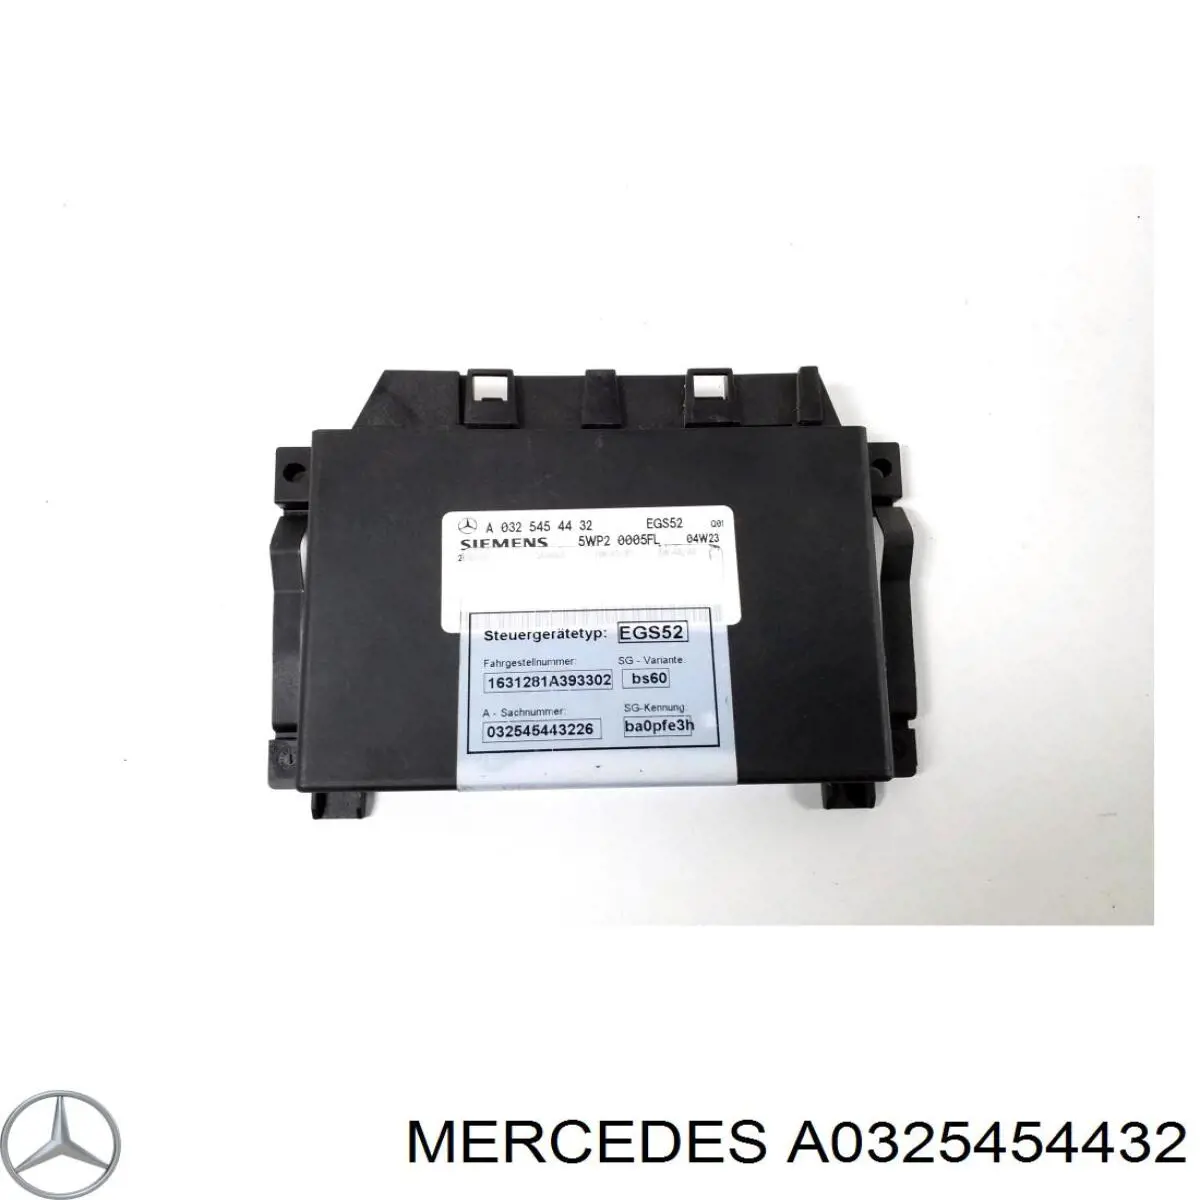 A0325454432 Mercedes